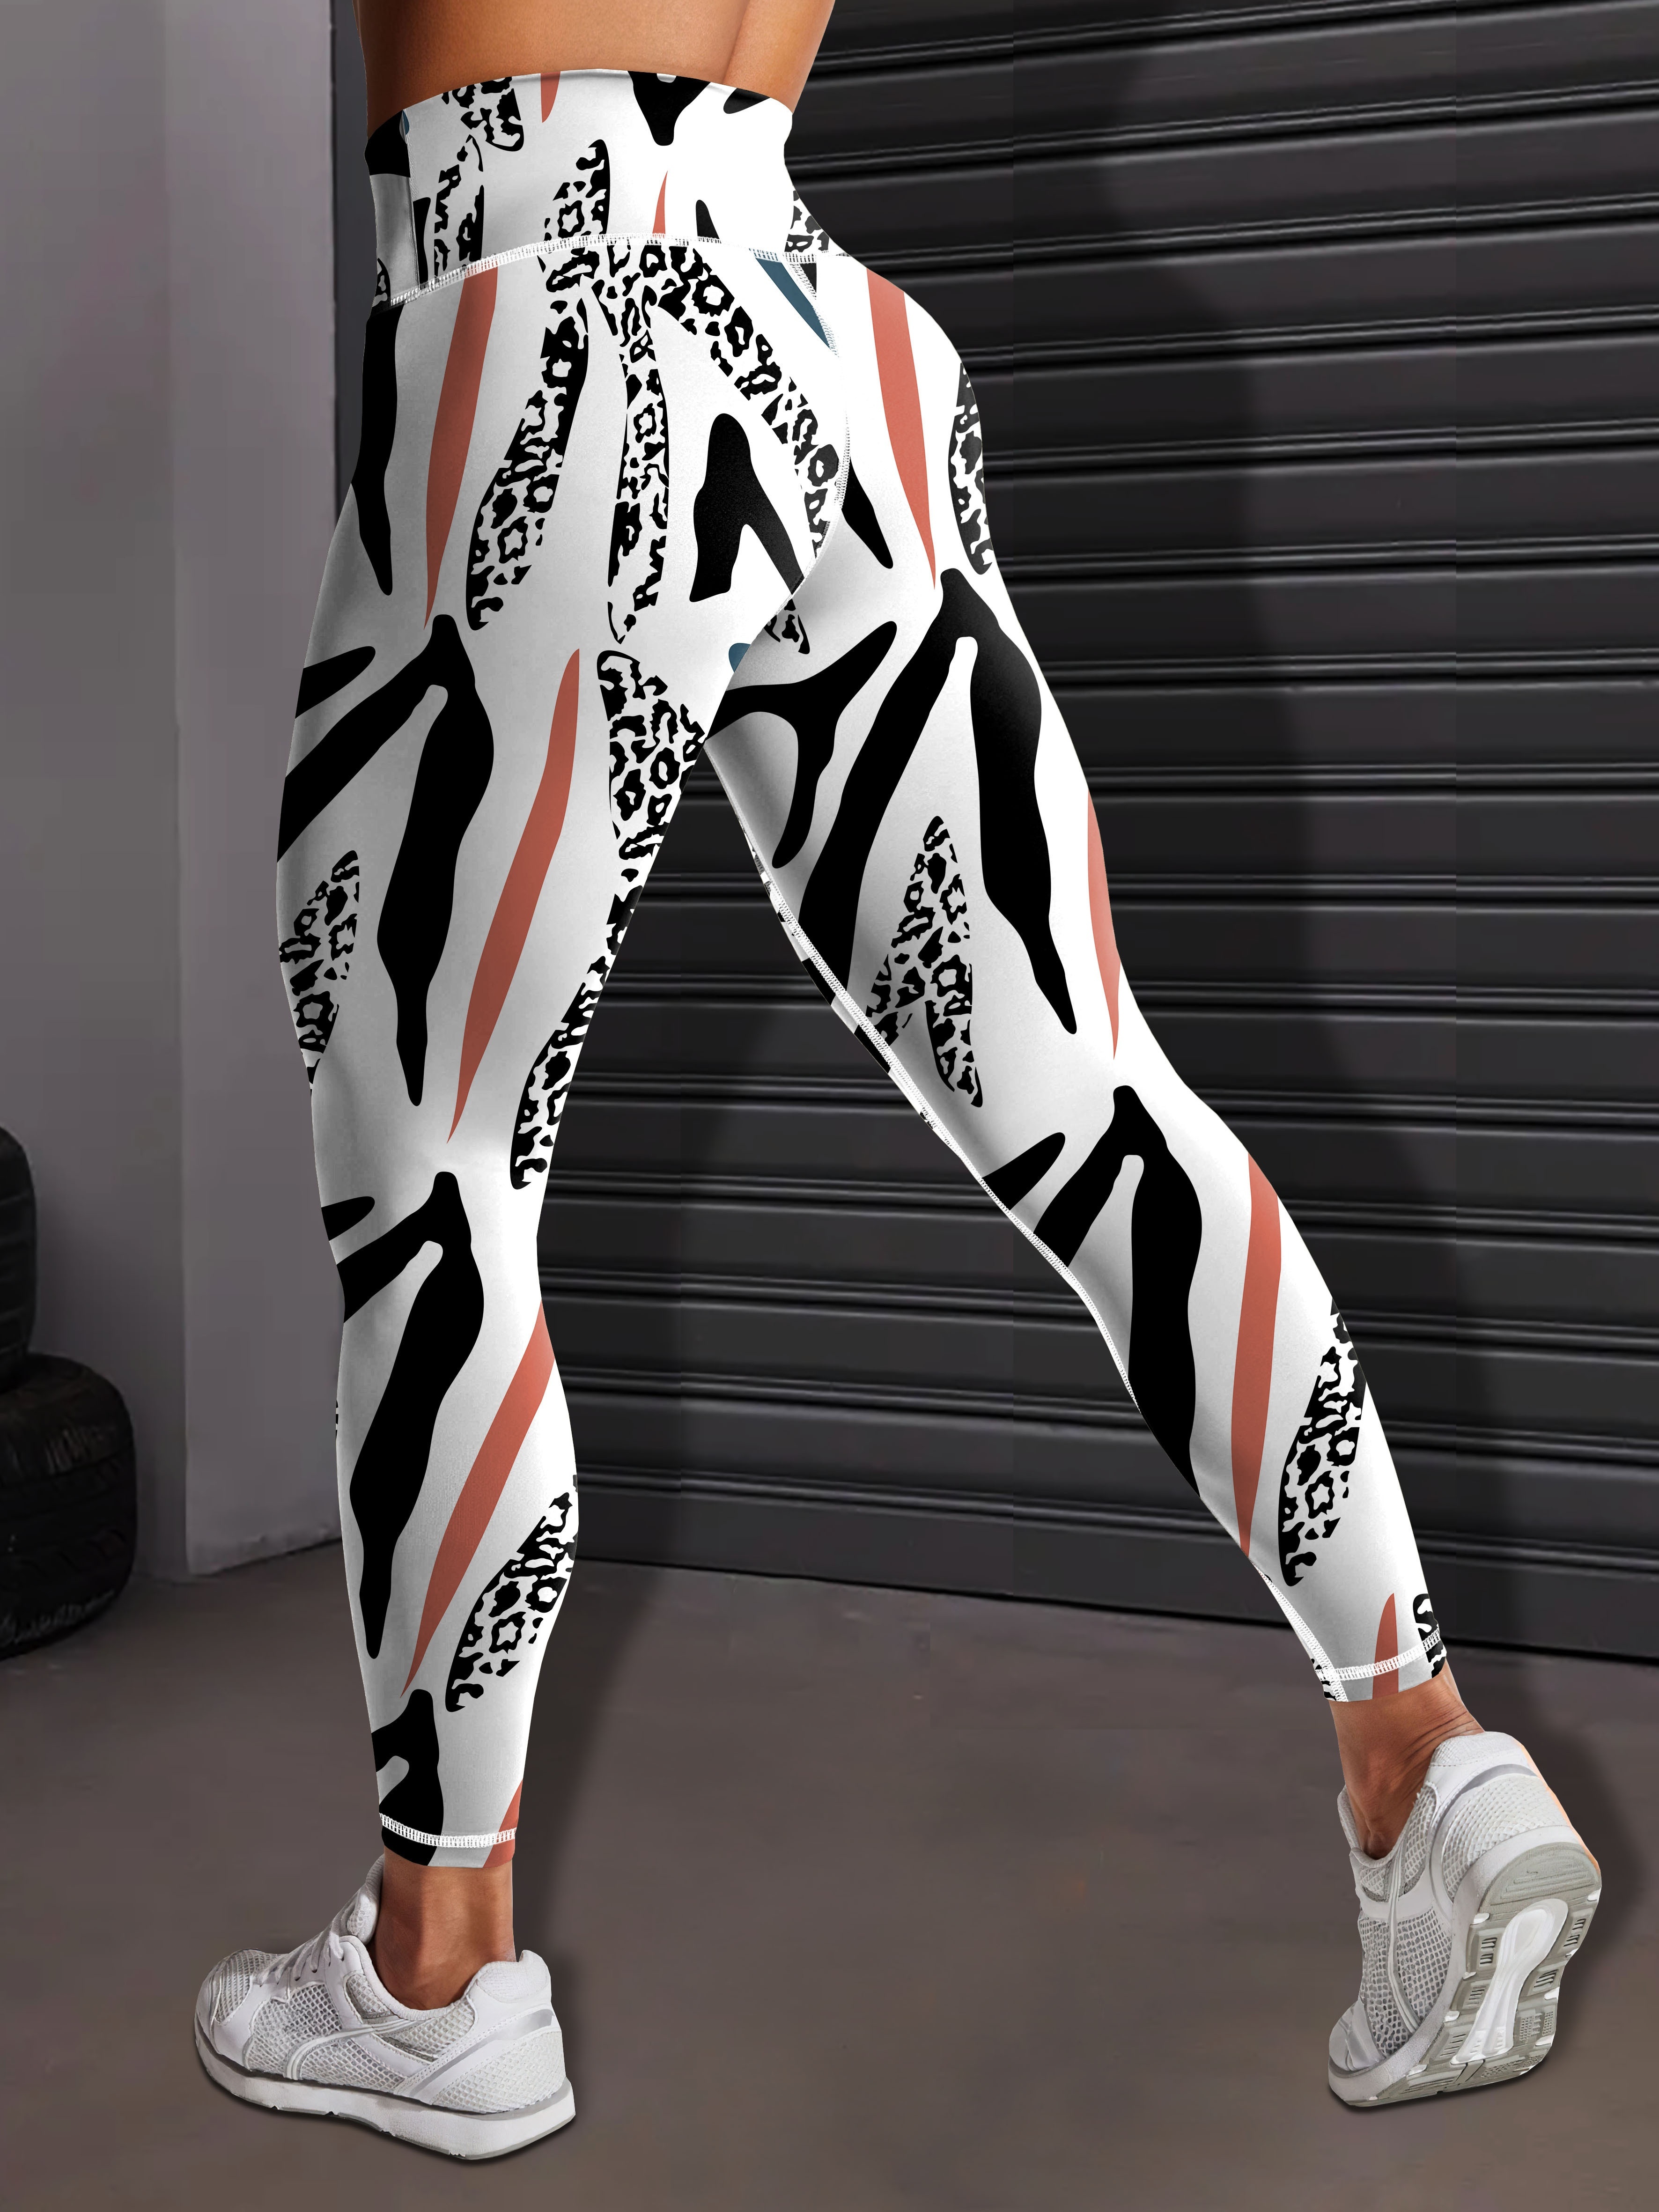 Stylish Zebra Print Leggings Trendy Animal Print Yoga Pants, Gym Wear -   Ireland